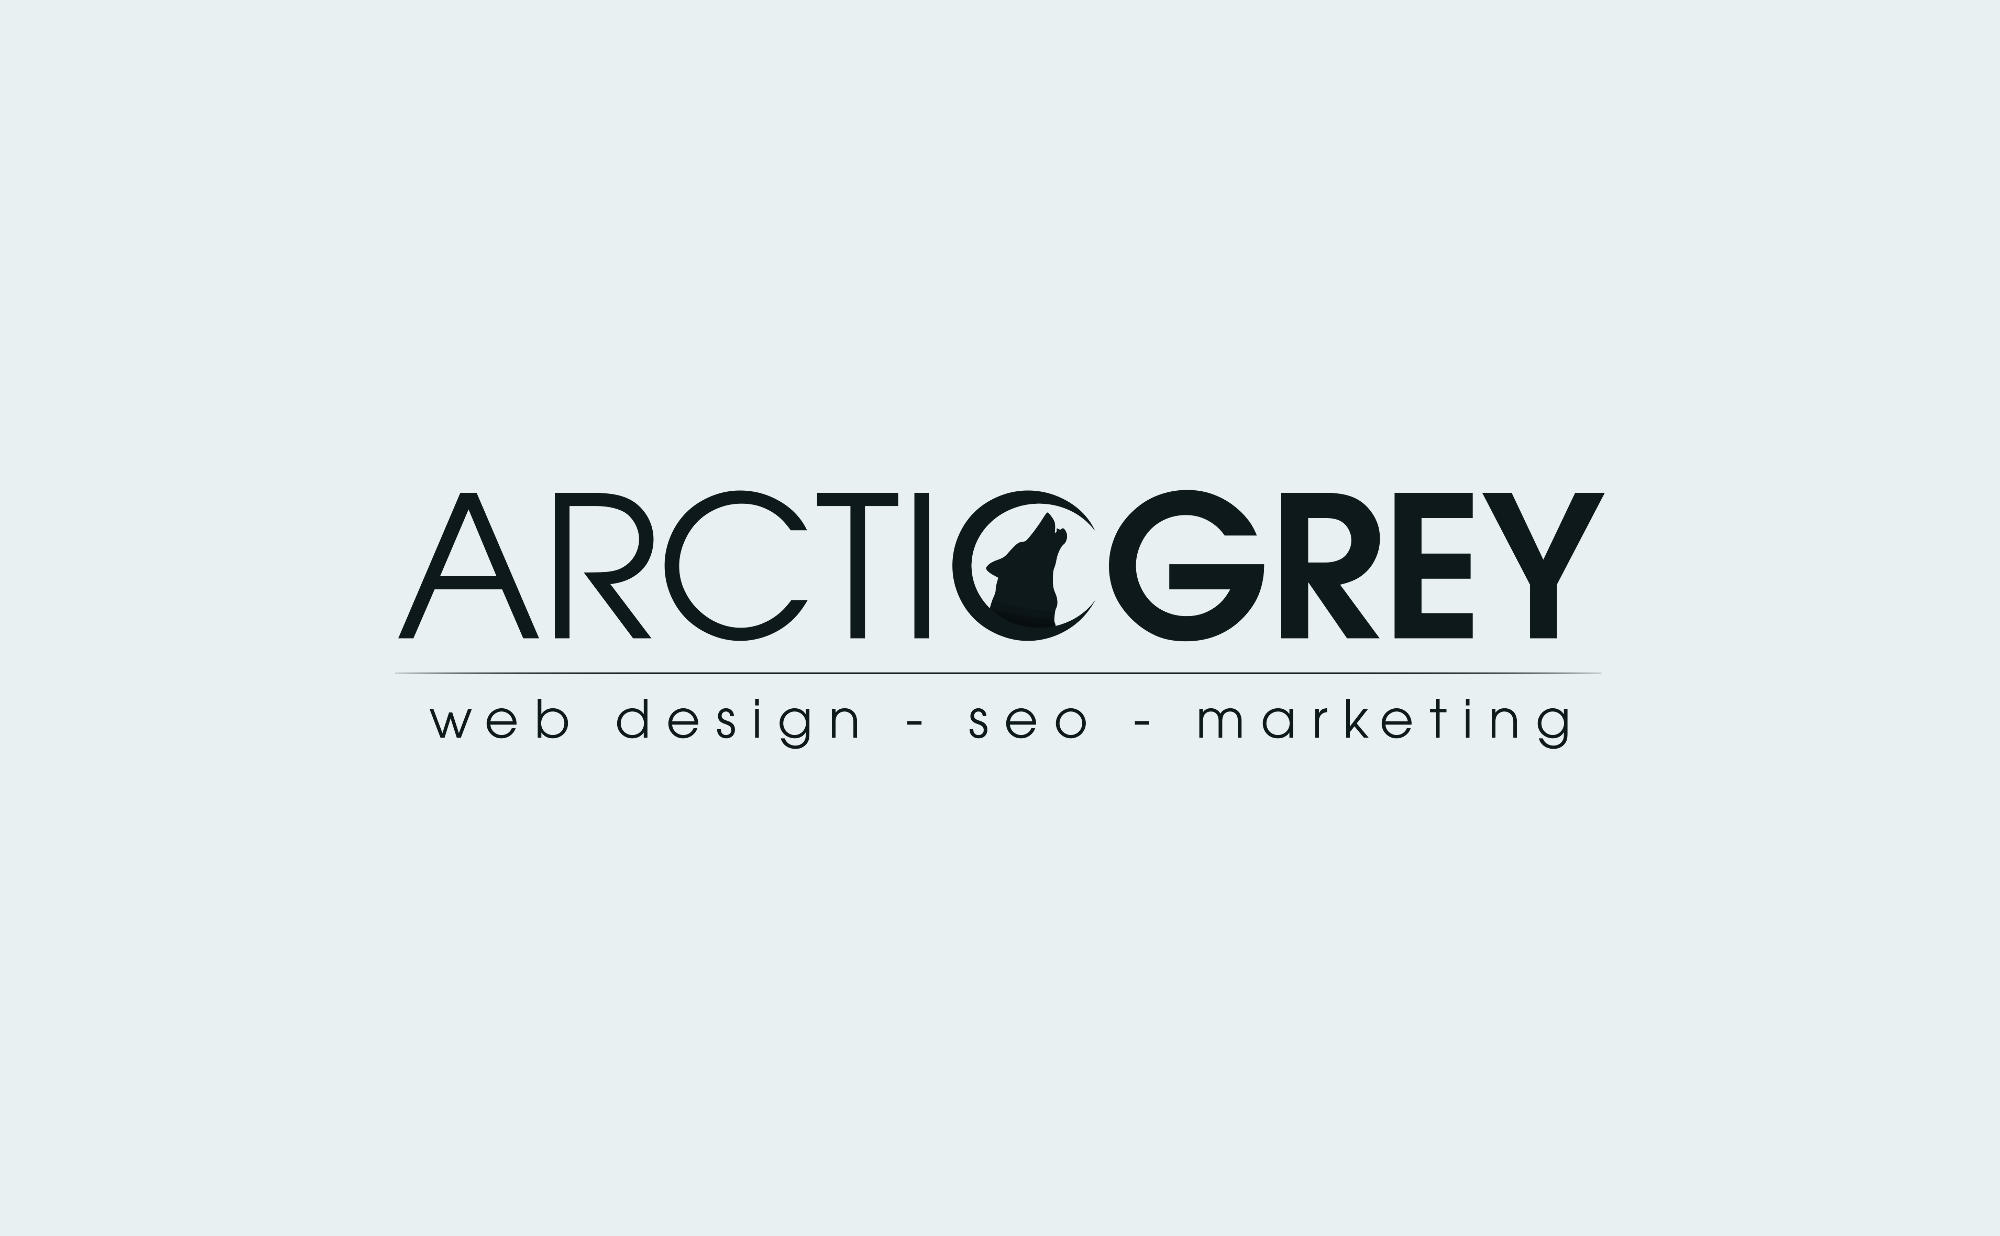 Best SEO Web Development Agency Logo: Arctic Grey Inc